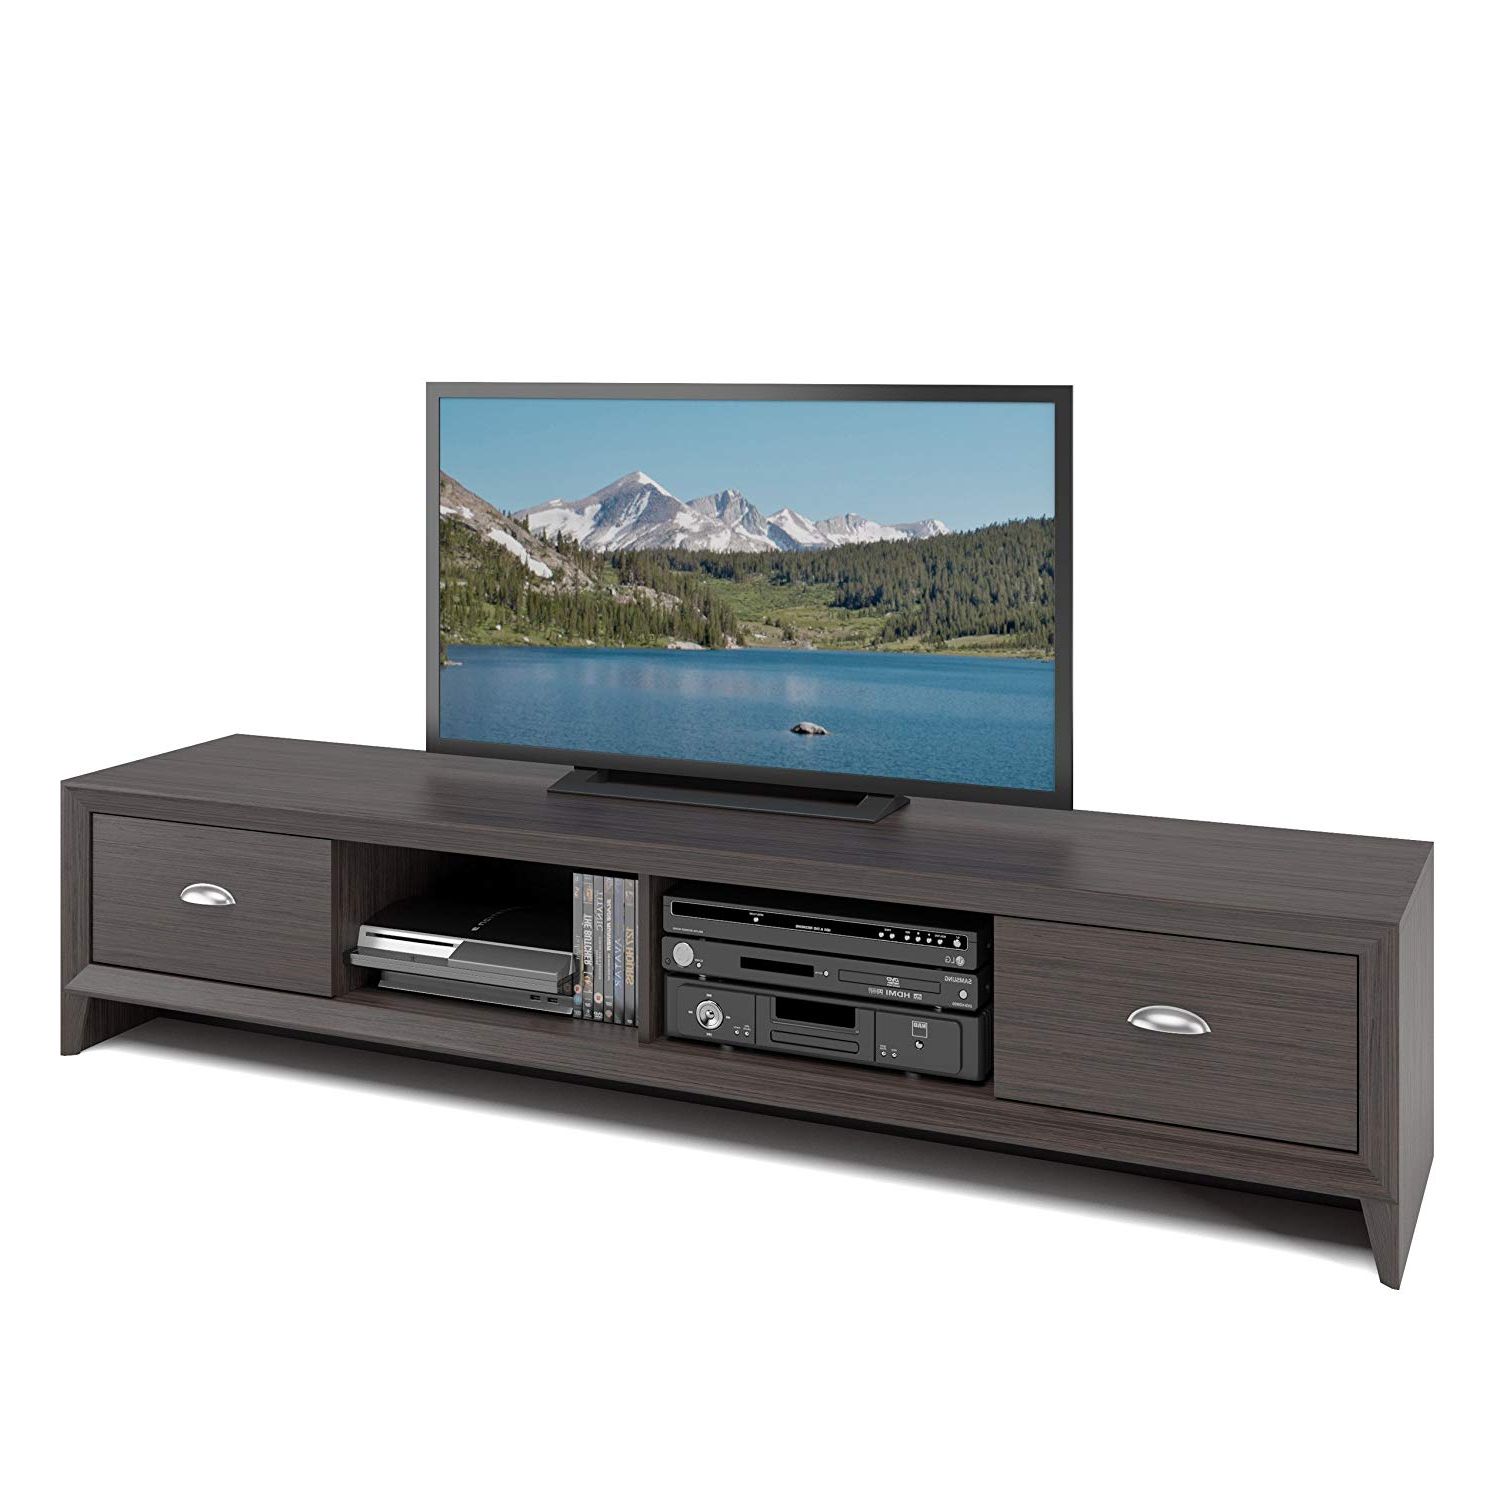 Amazon: Corliving Tlk 872 B Lakewood Tv Bench, Modern Wenge Regarding Most Recent Long Tv Stands Furniture (View 13 of 20)